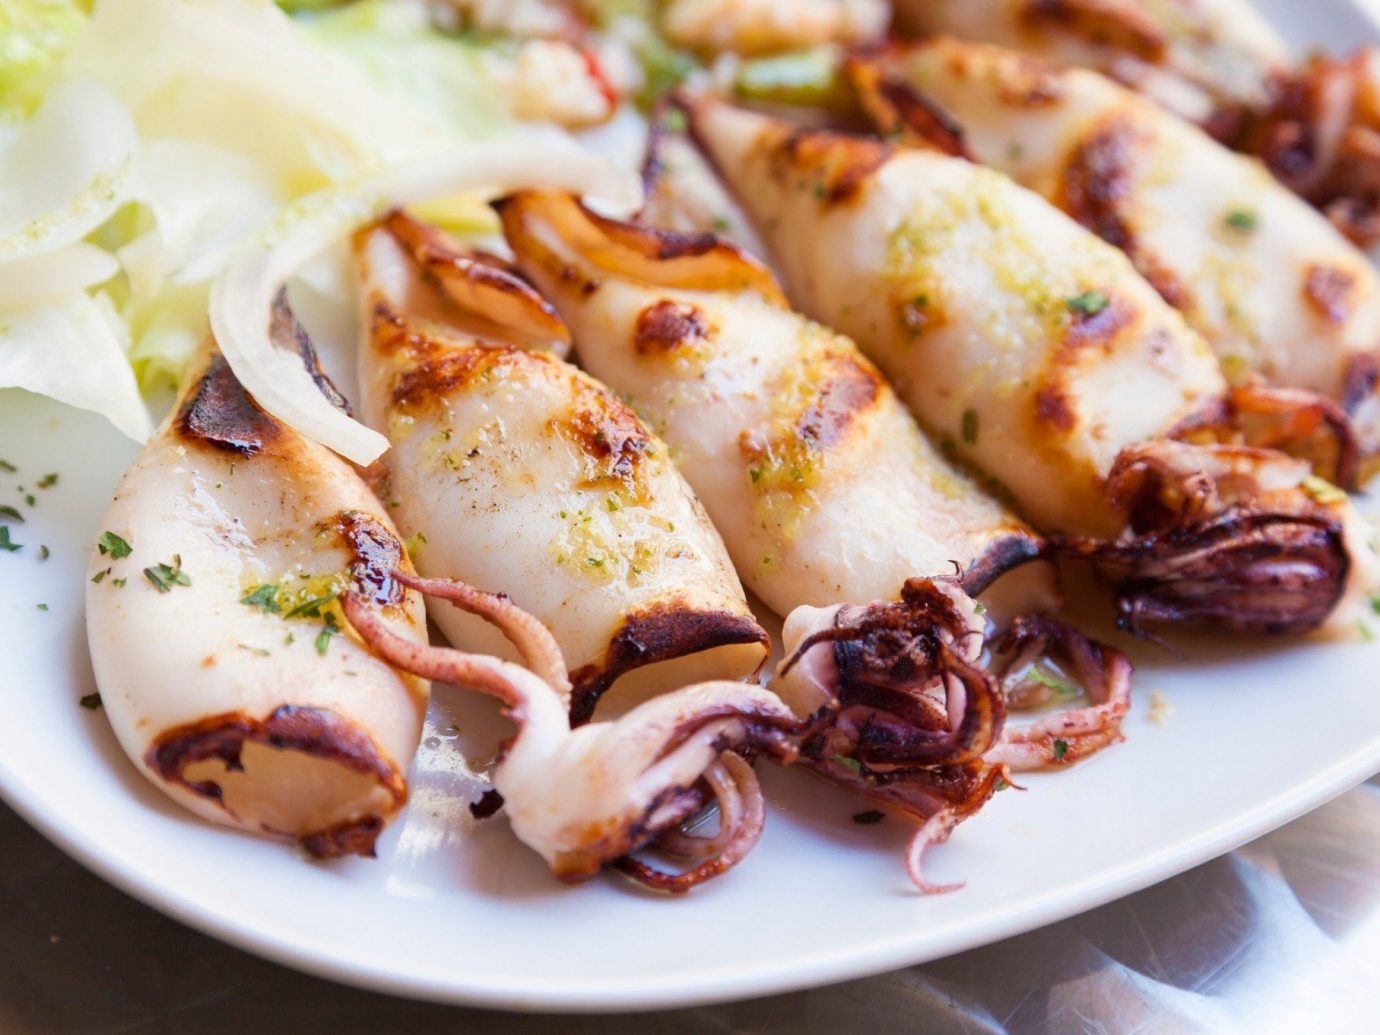 Trip Ideas plate food dish cuisine meat produce meal Seafood vegetable asian food breakfast pork